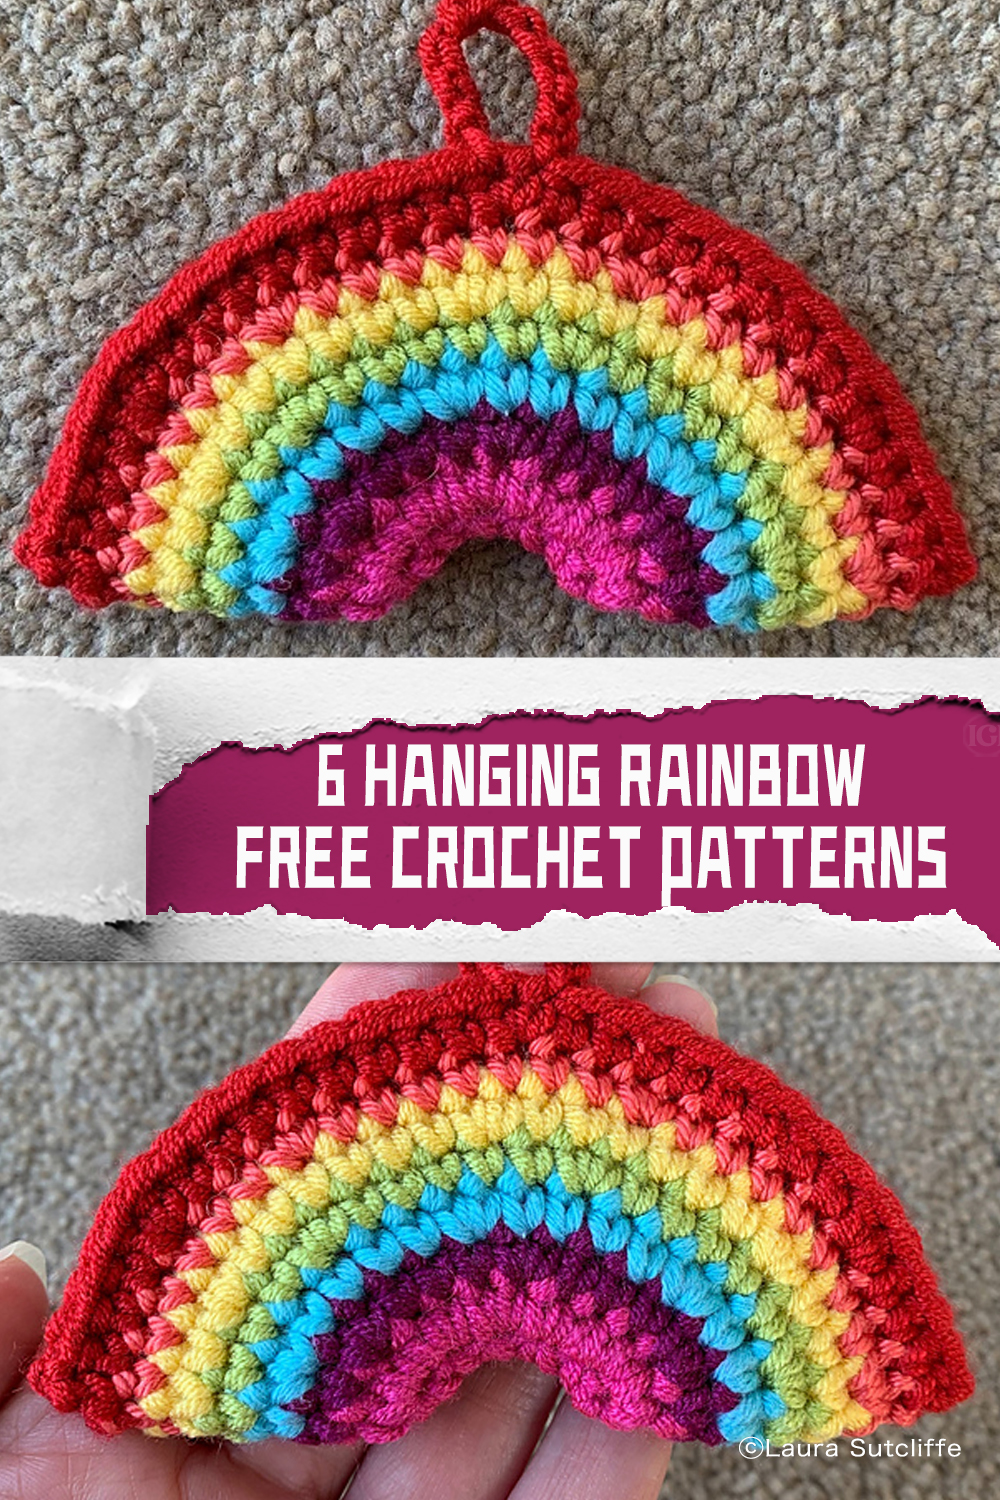 5 . Rainbow OF HOPE FREE Crochet Pattern 